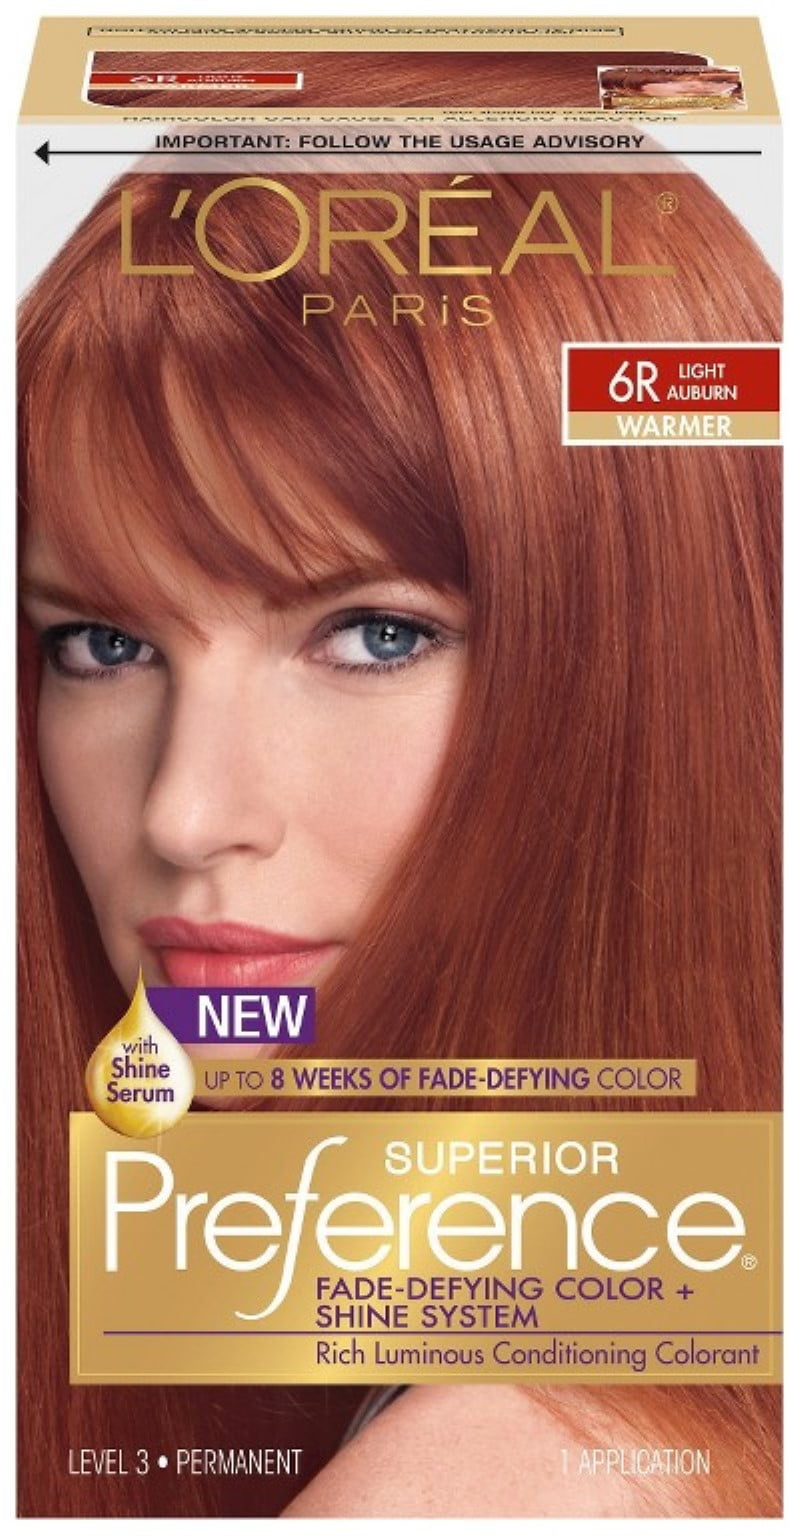 L'Oreal Paris Preference Permanent Hair Color, 6R Auburn (Warmer) - Walmart.com